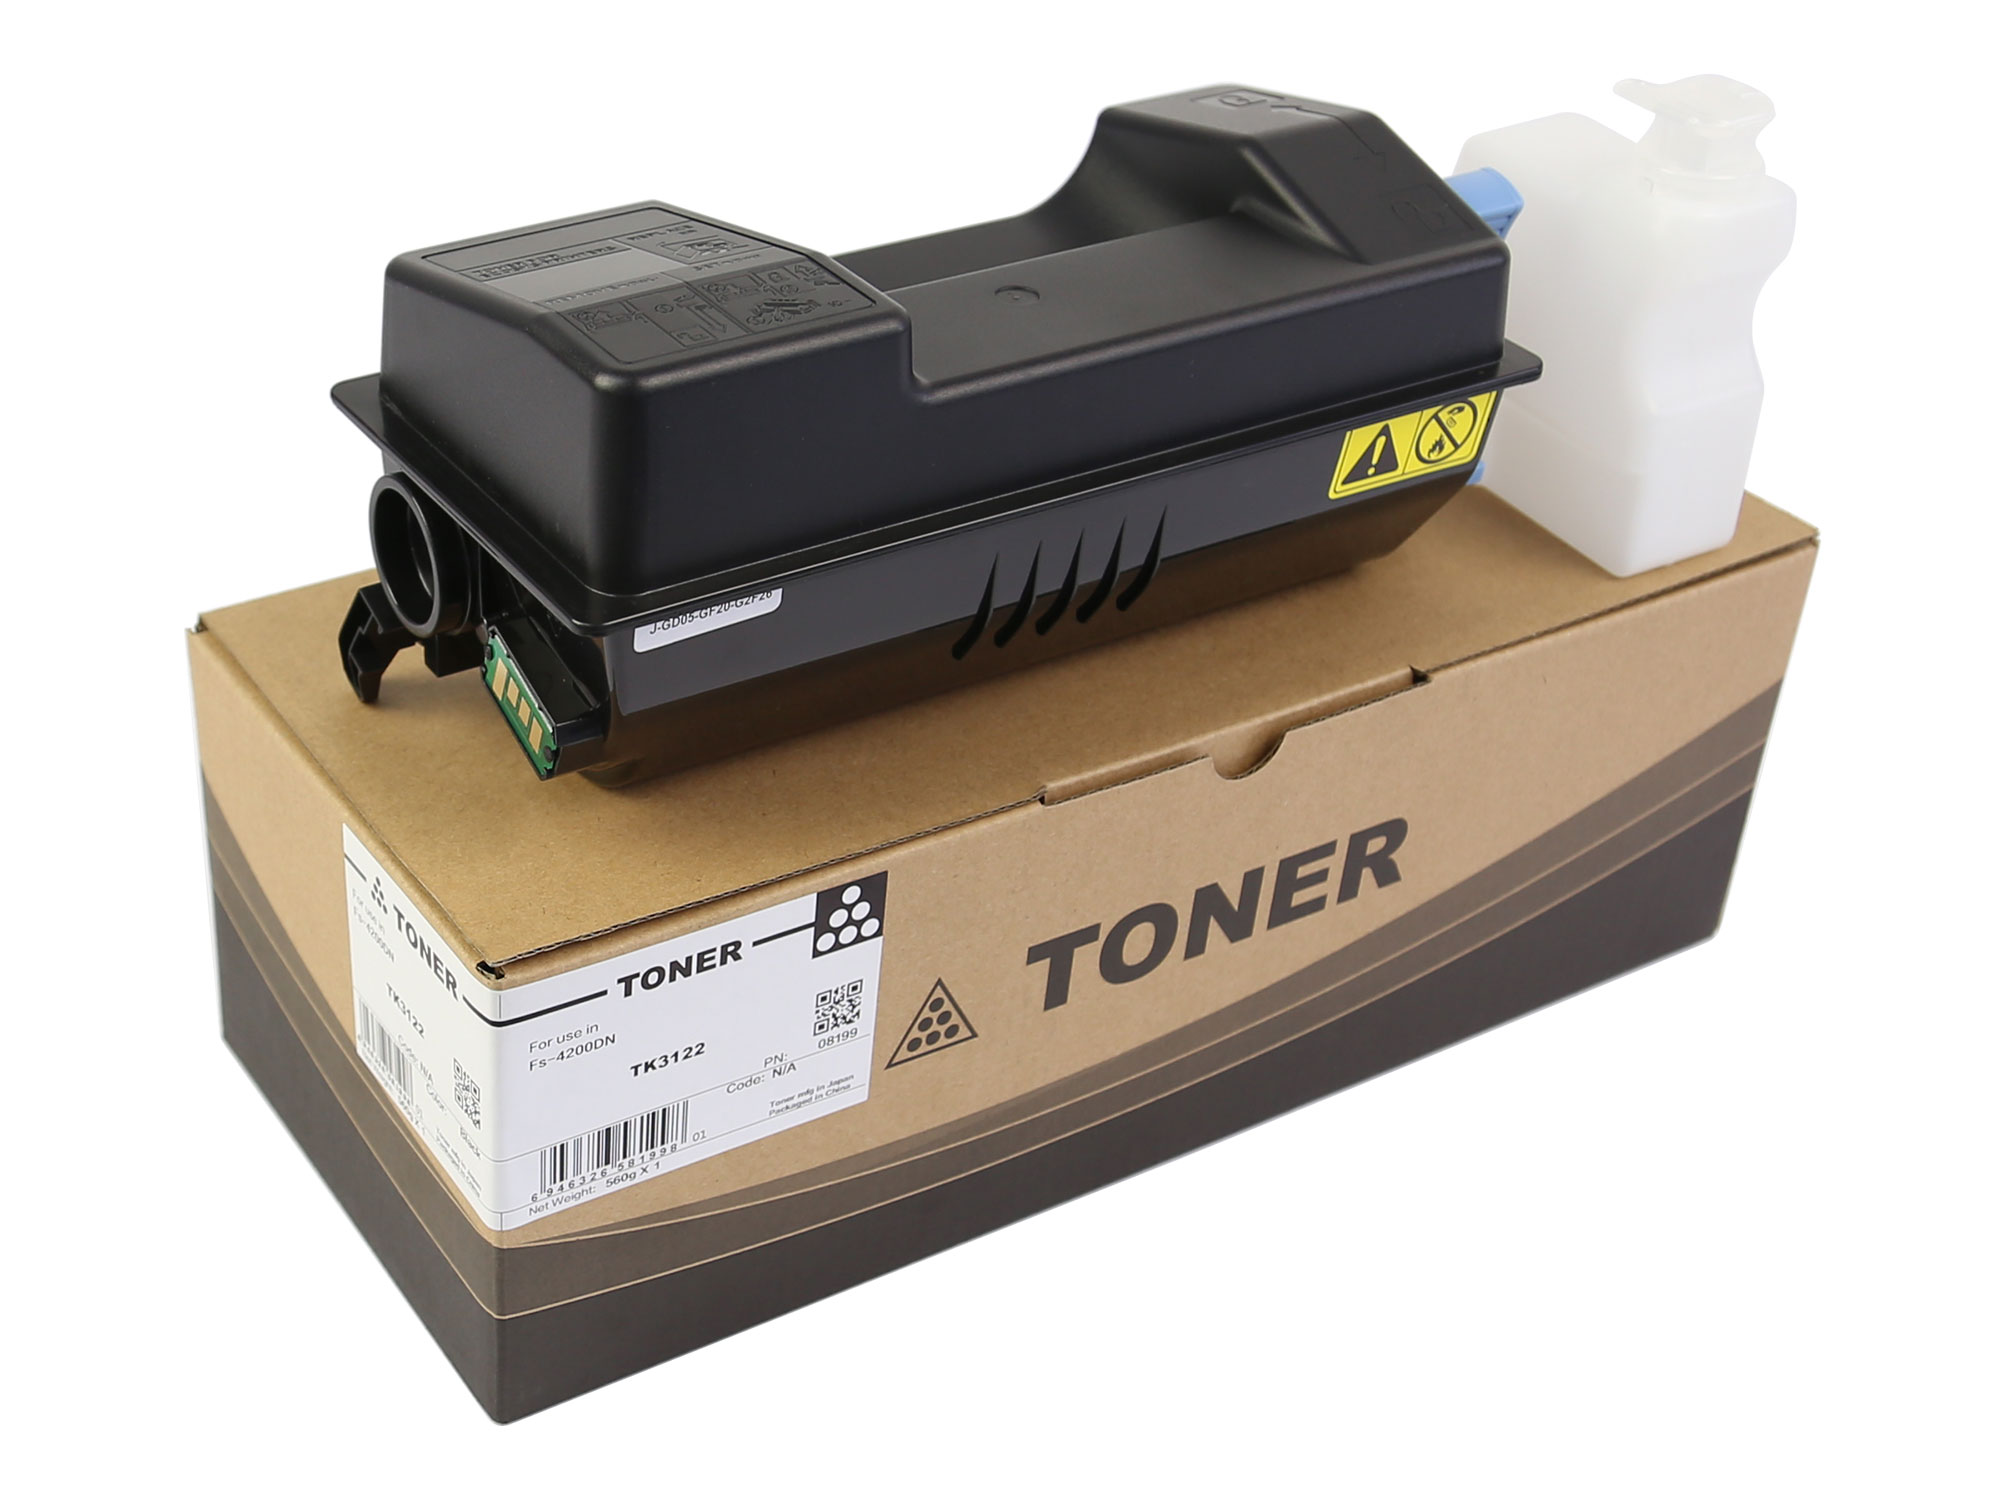 TK-3122 Toner Cartridge for Kyocera ECOSYS M3550idn